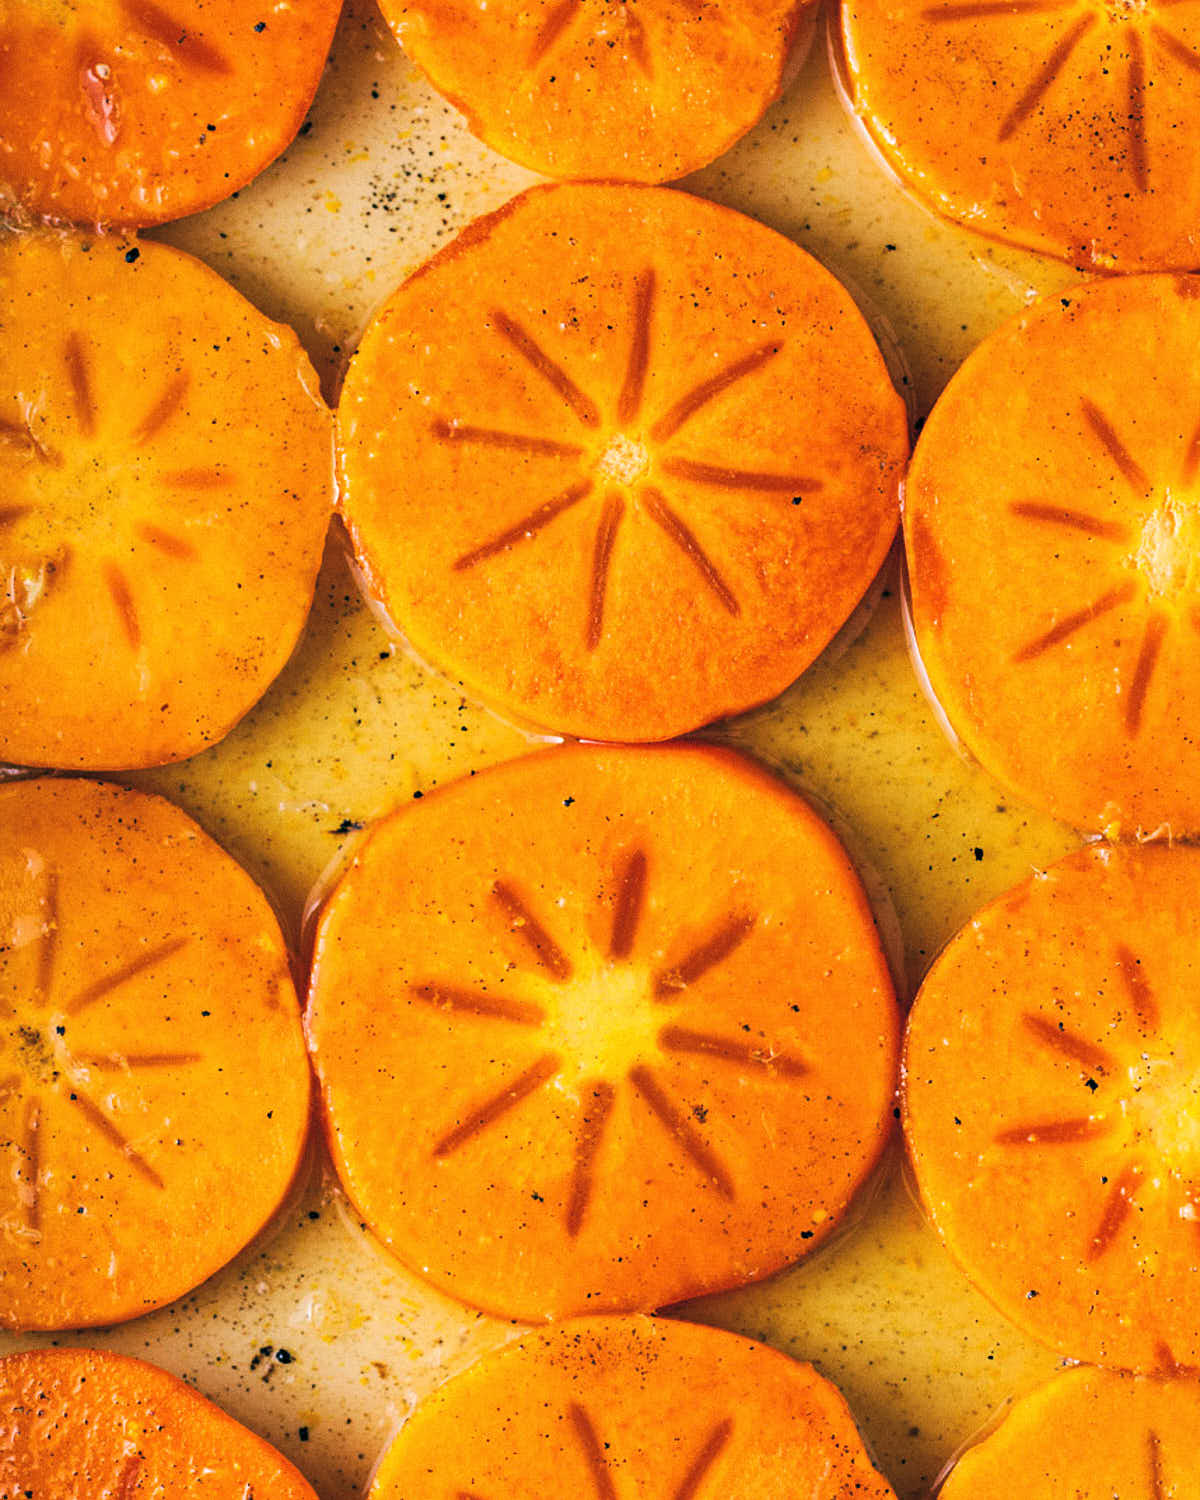 Caramelized persimmons in baking pan